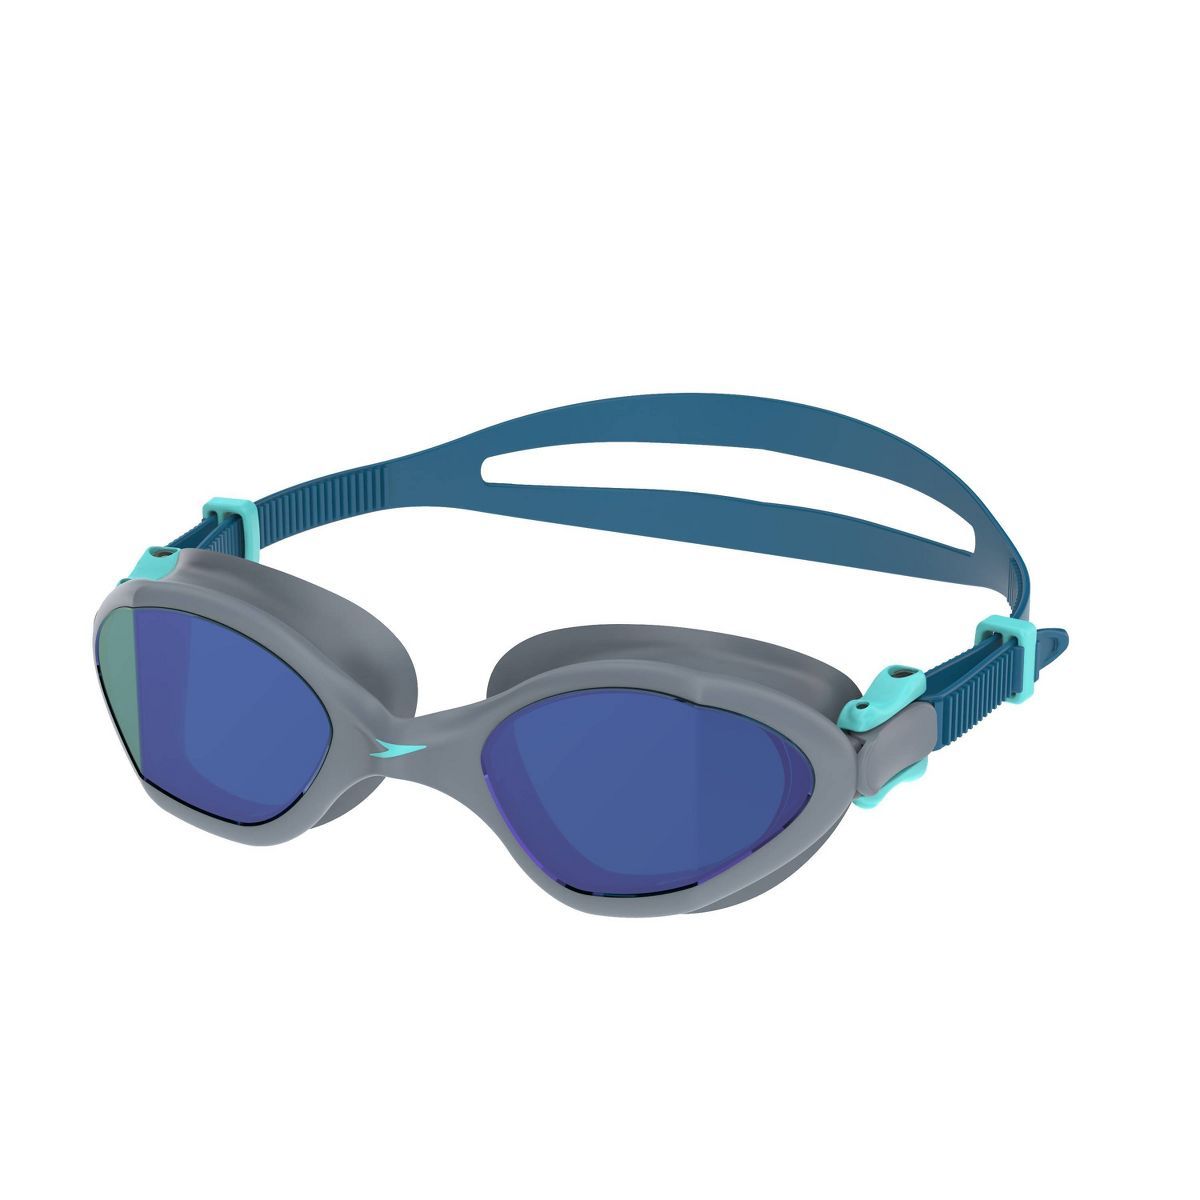 Speedo Jr Amp Mirrored Swim Goggles - Gray/Blue | Target